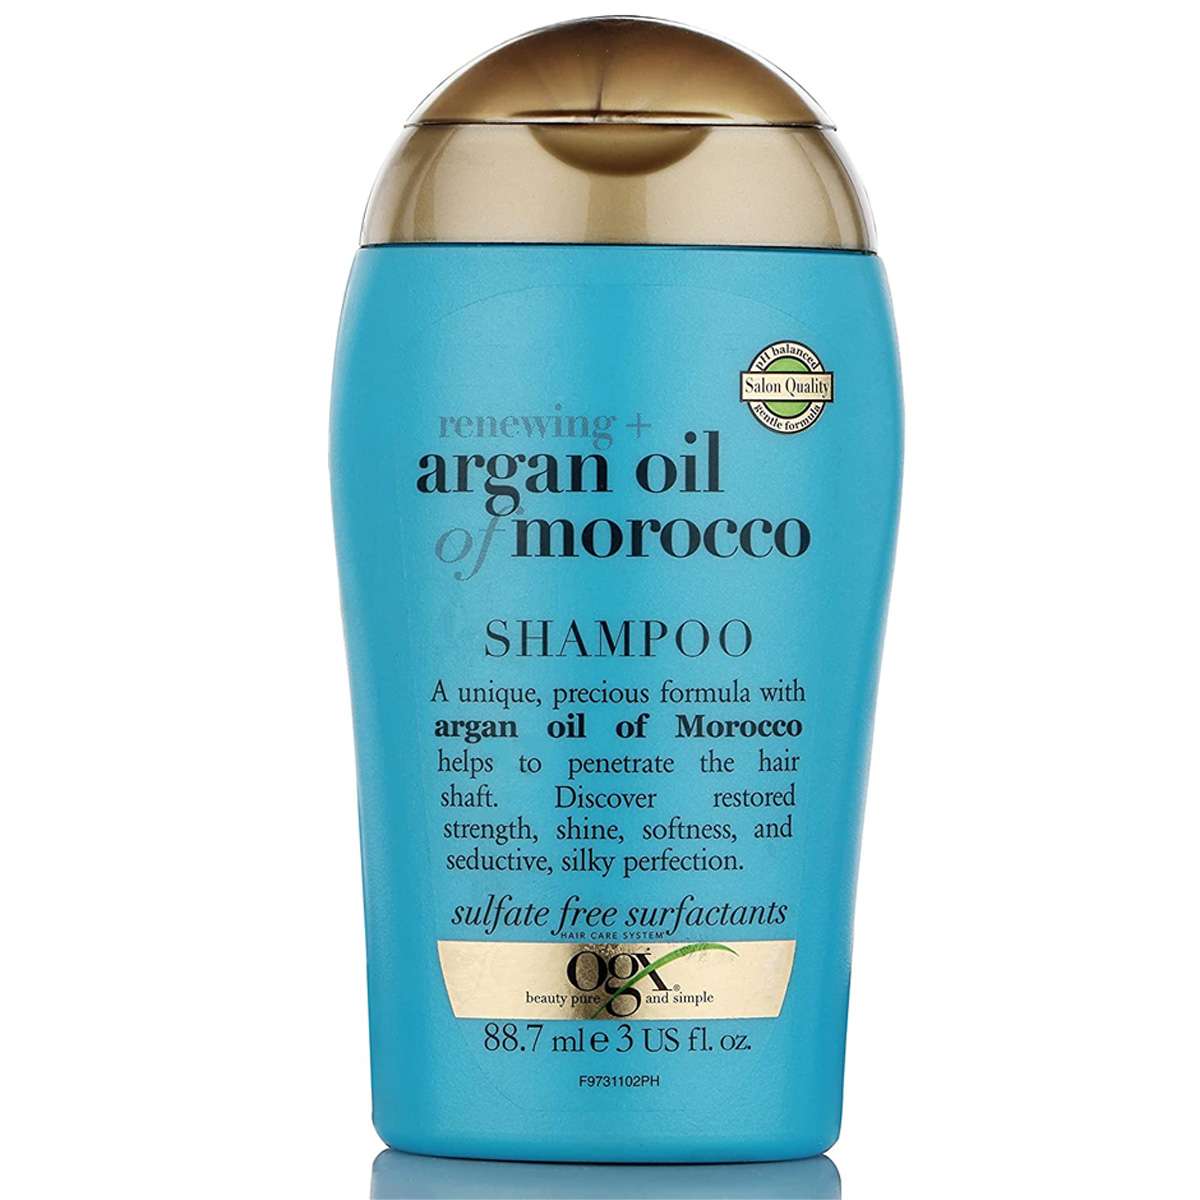 OGX Travel Renewing And Argan Oil Of Morocco Shampoo, 88.7ml